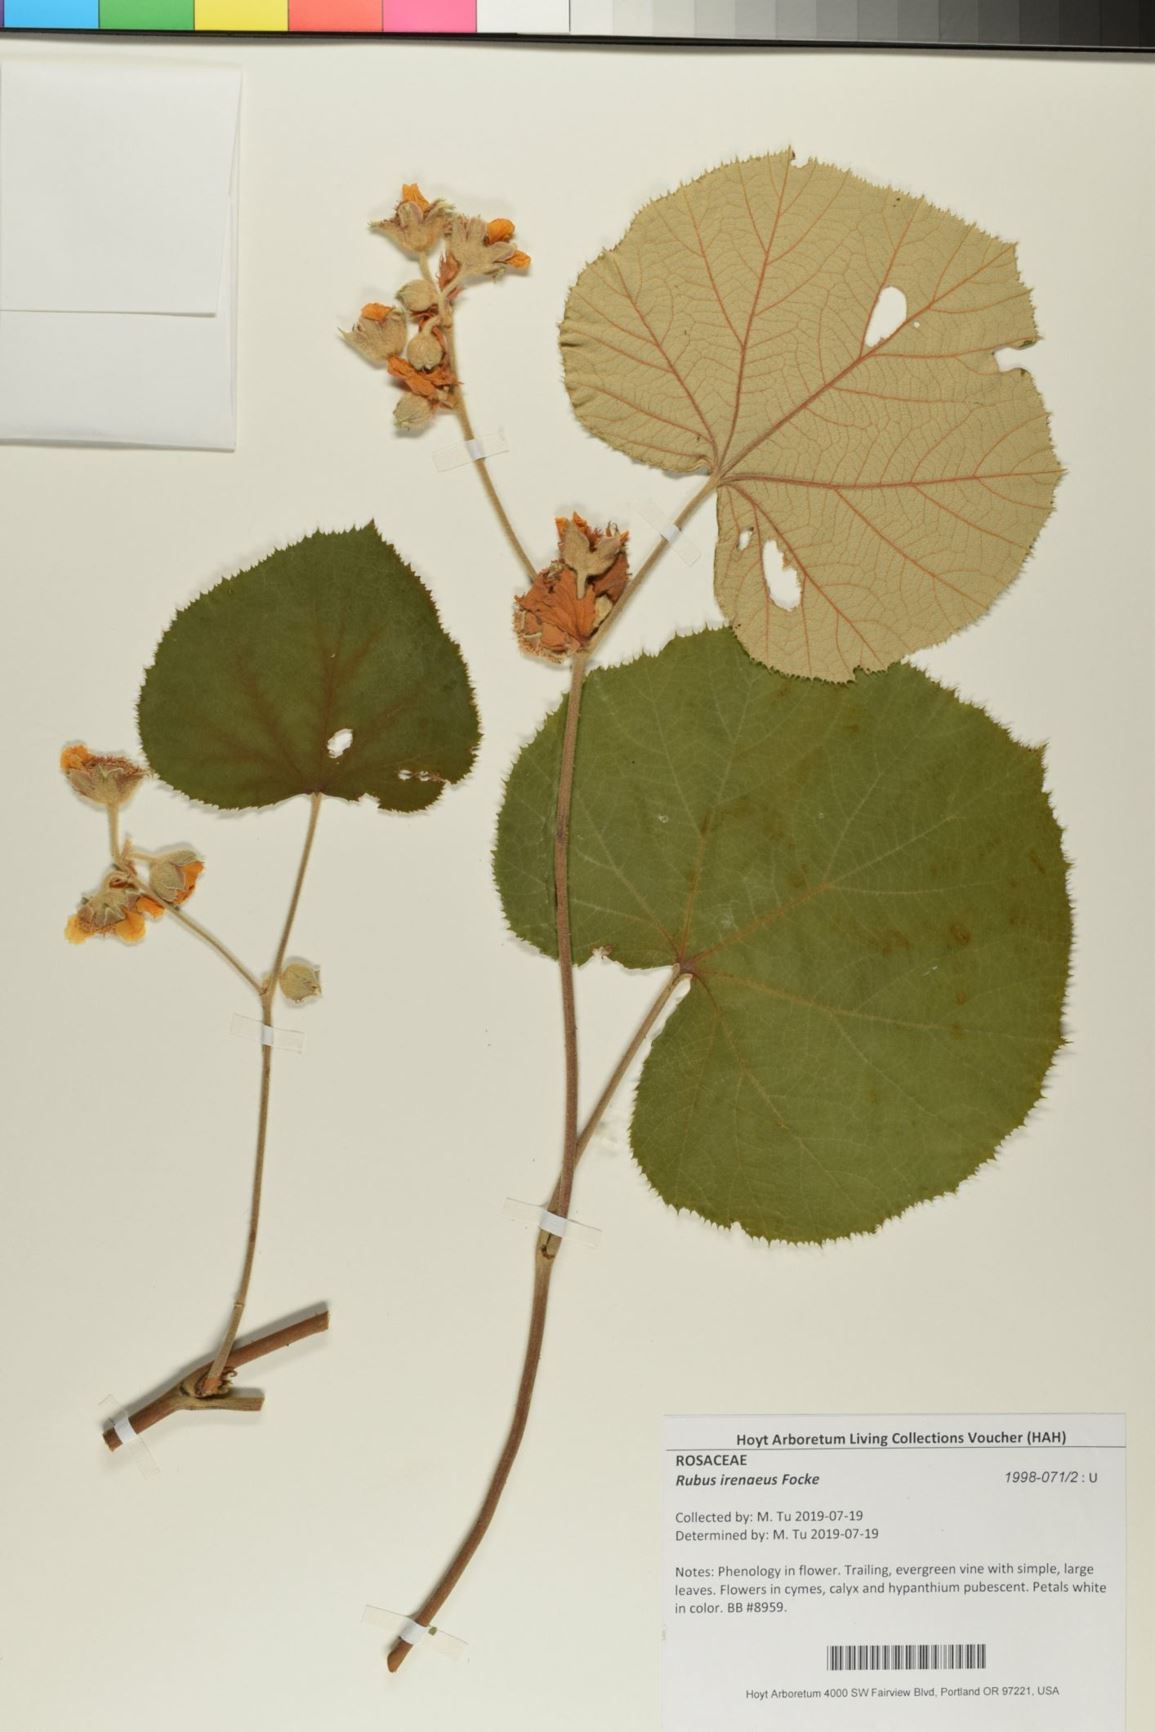 Rubus irenaeus - bigleaf raspberry